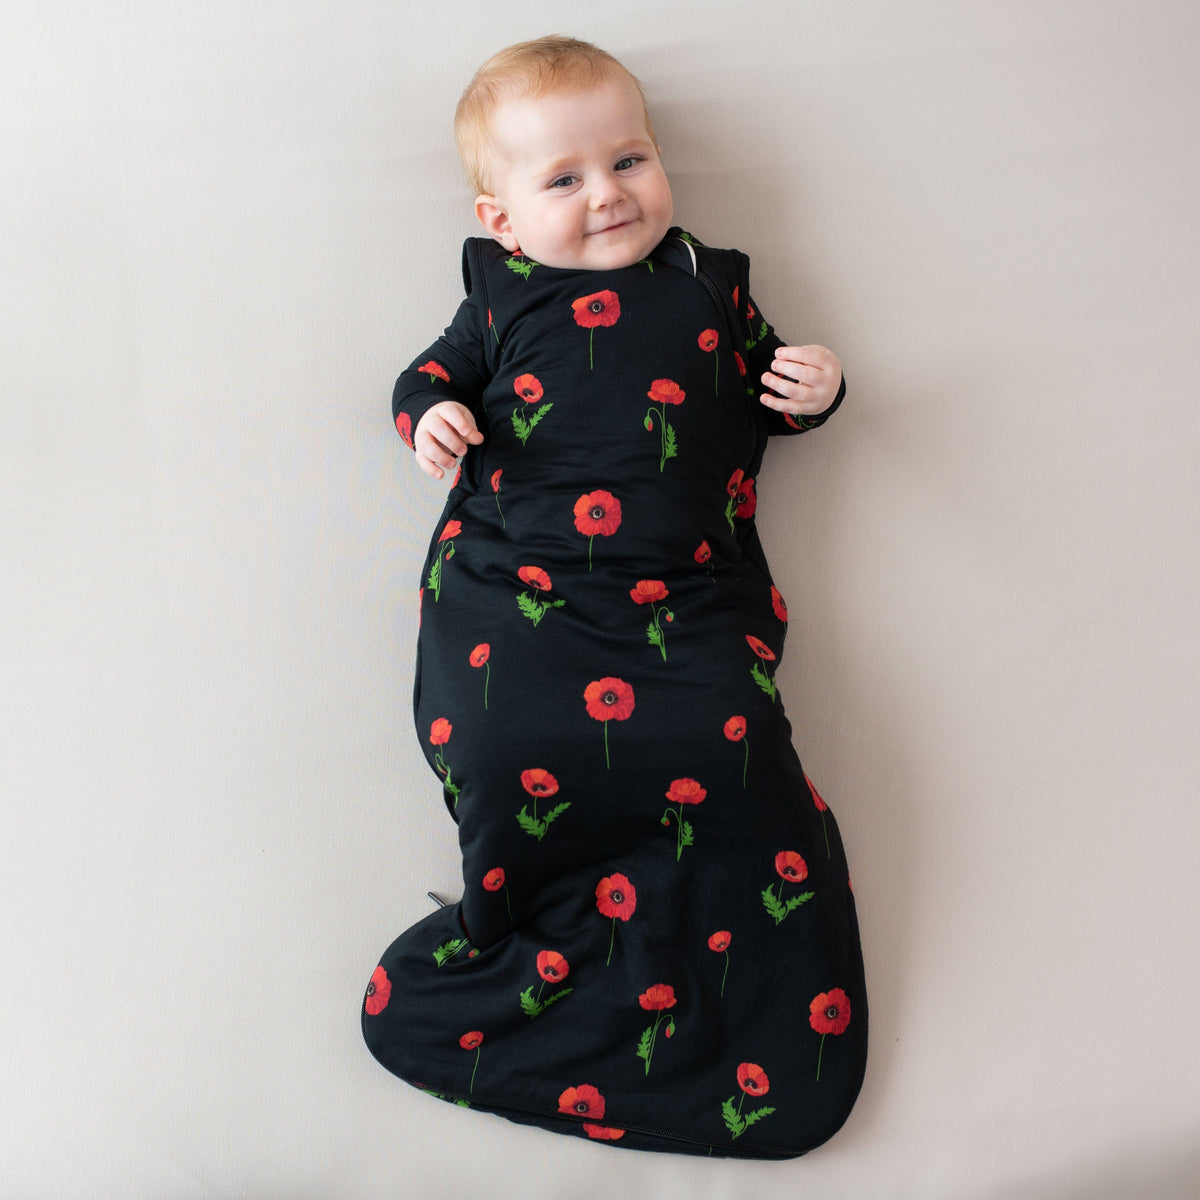 Kyte Baby Sleep Bag 1.0 Tog Sleep Bag in Midnight Poppies 1.0